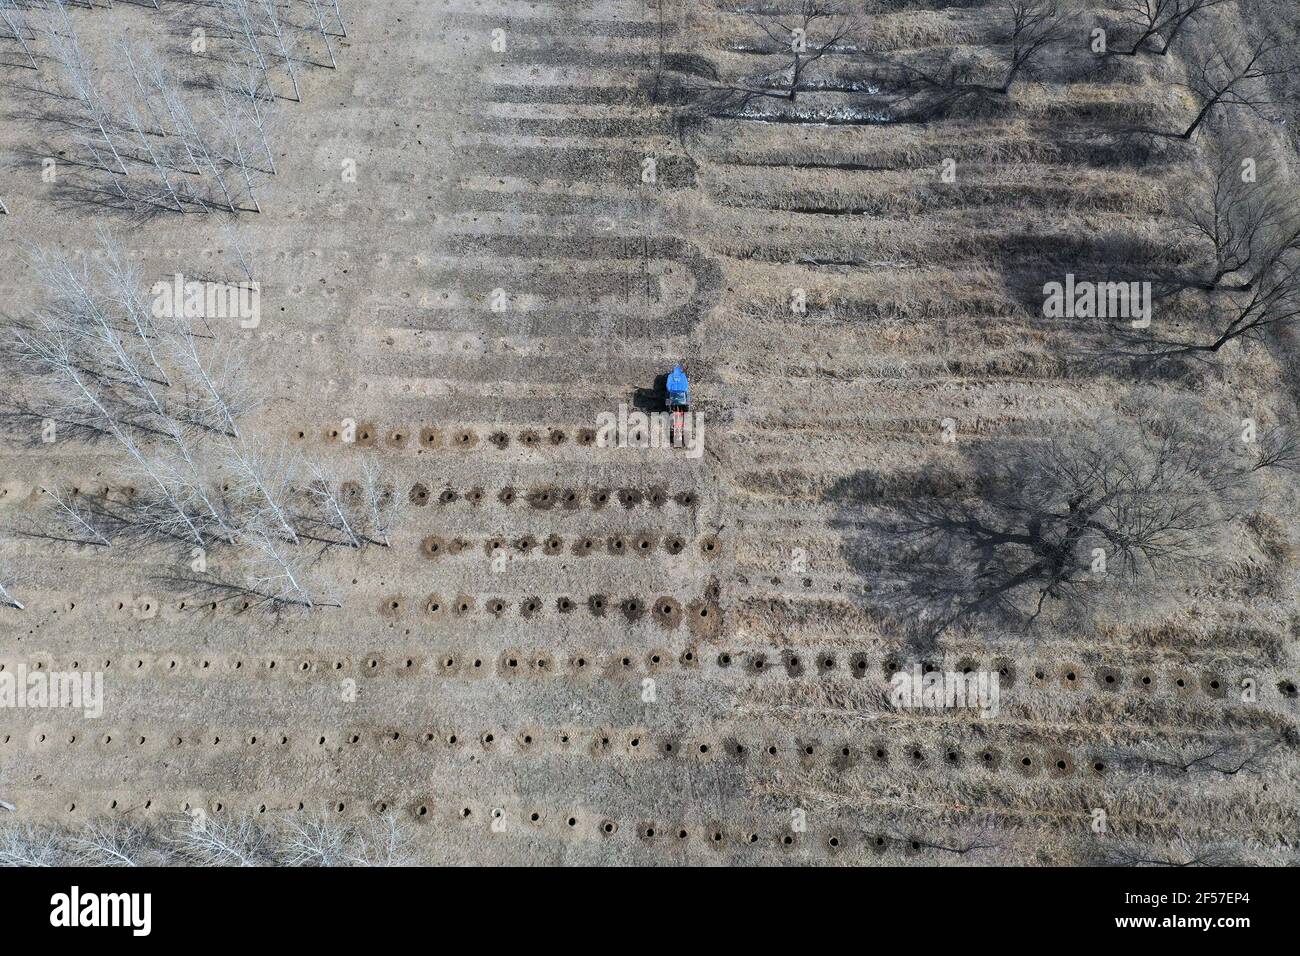 SHENYANG, CHINA - MARCH 24, 2021 - Aerial photo a tree drilling machine is used to drill trees. March 24, 2021, Shenyang, Liaoning Province, China. (Photo by Ji Zhe / Costfoto/Sipa USA) Stock Photo